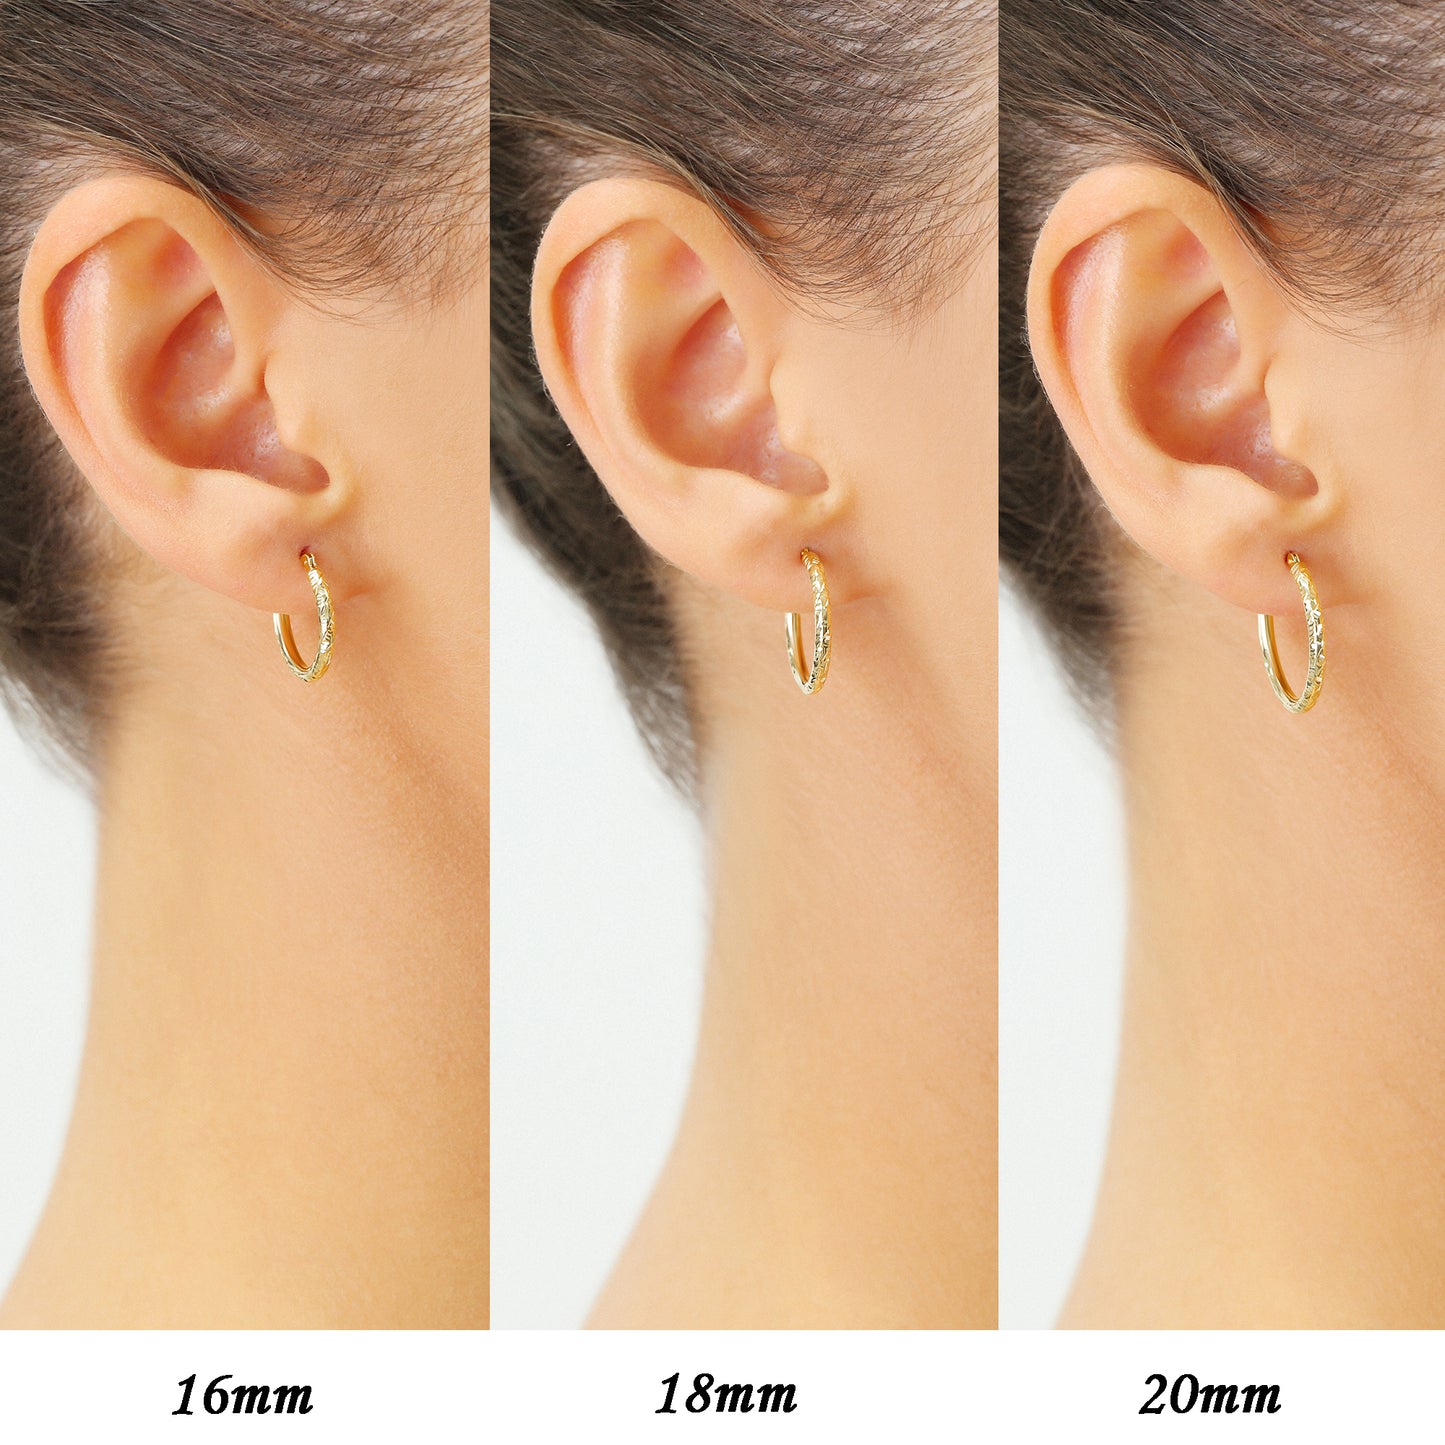 14K Yellow Gold Hoop Earrings with Hand Engraved Tornado Design